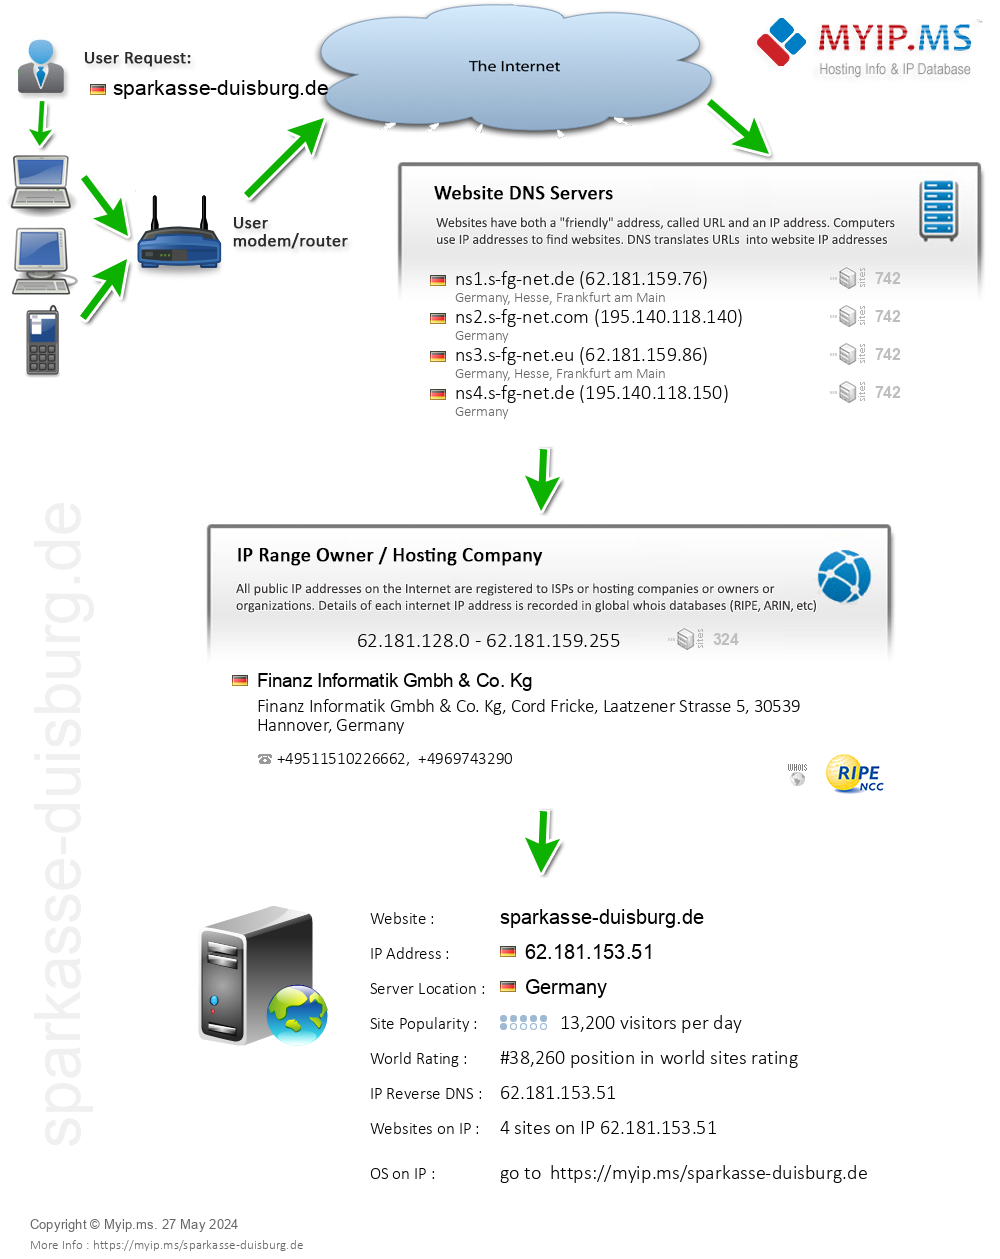 Sparkasse-duisburg.de - Website Hosting Visual IP Diagram